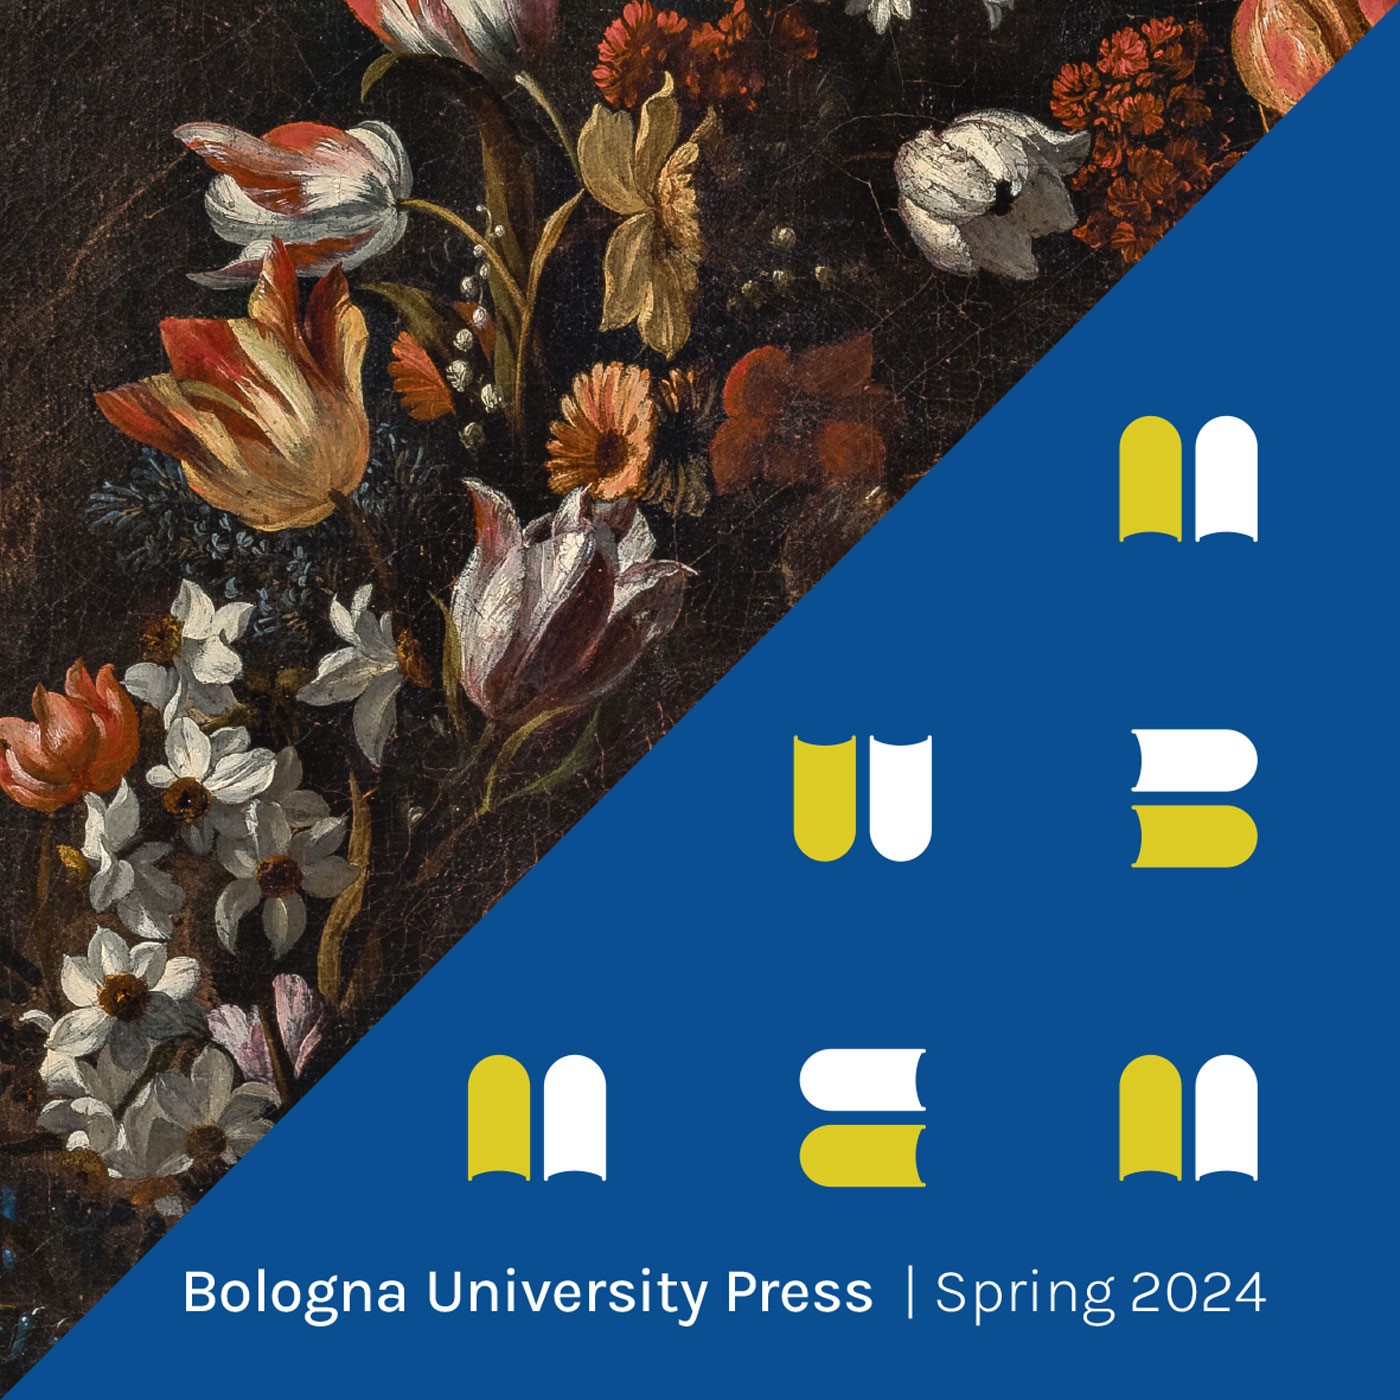 CATALOGO SPRING 2024 - Bologna University Press